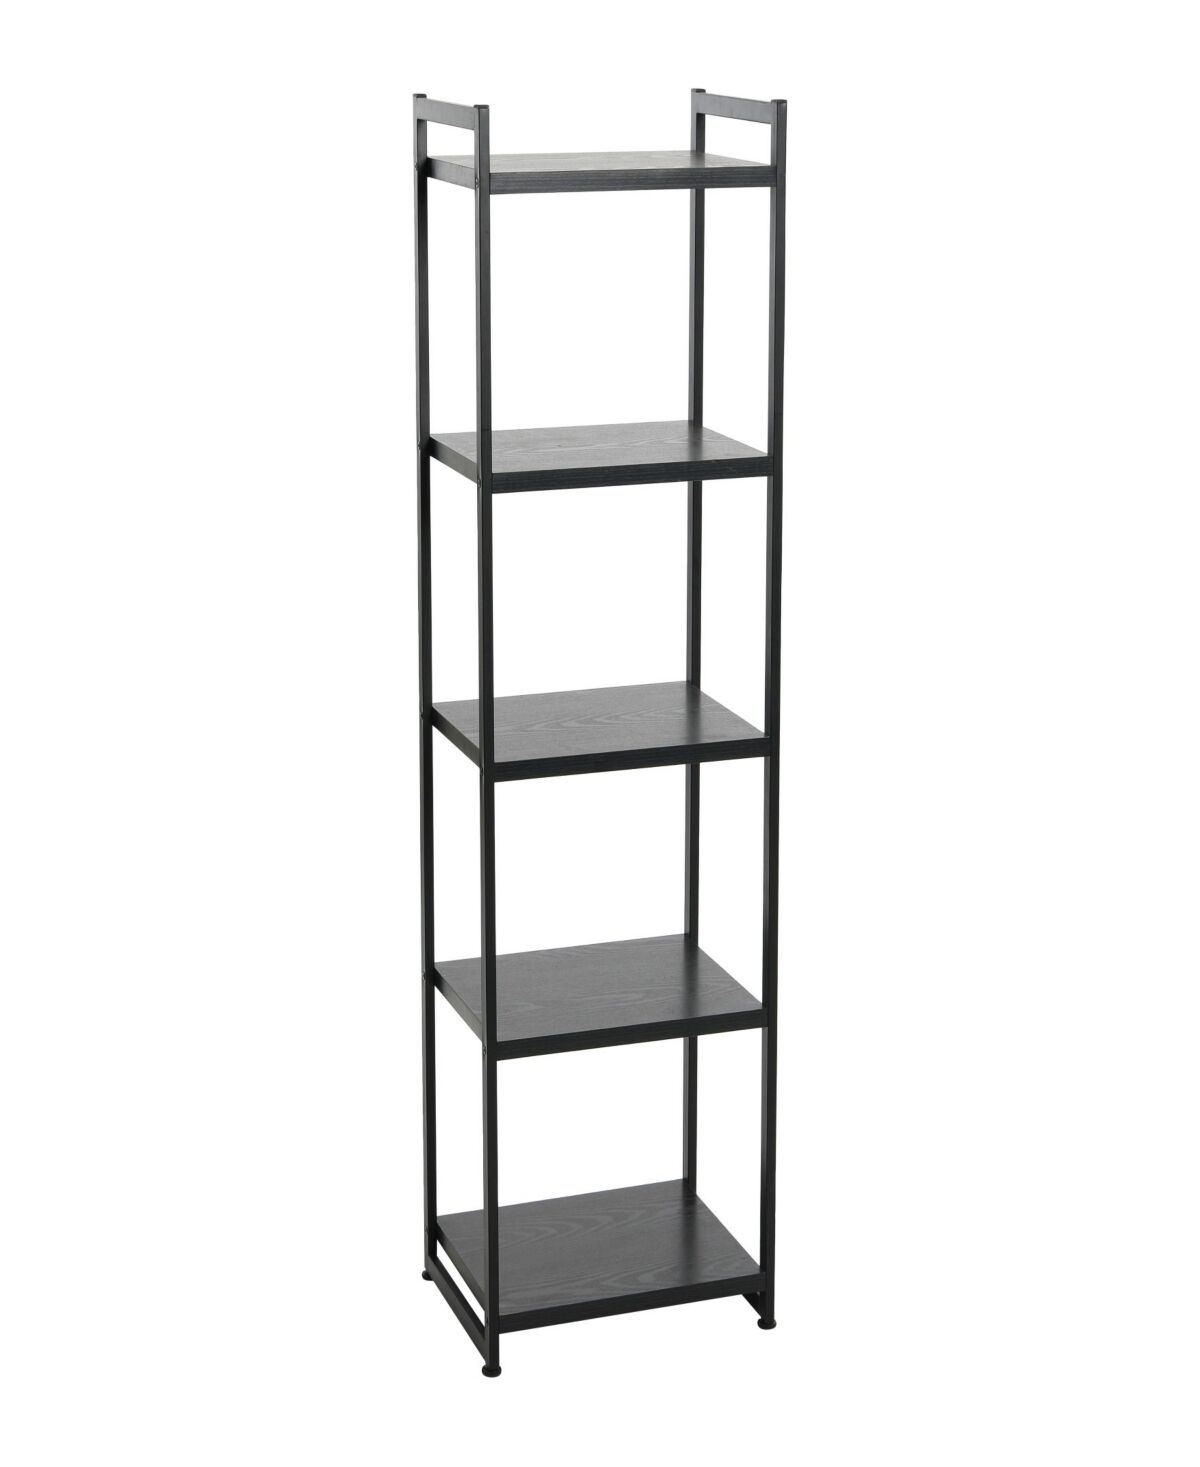 Household Essentials Tower Bookshelf, Tall and Narrow Bookshelf with 5 Shelves - Black